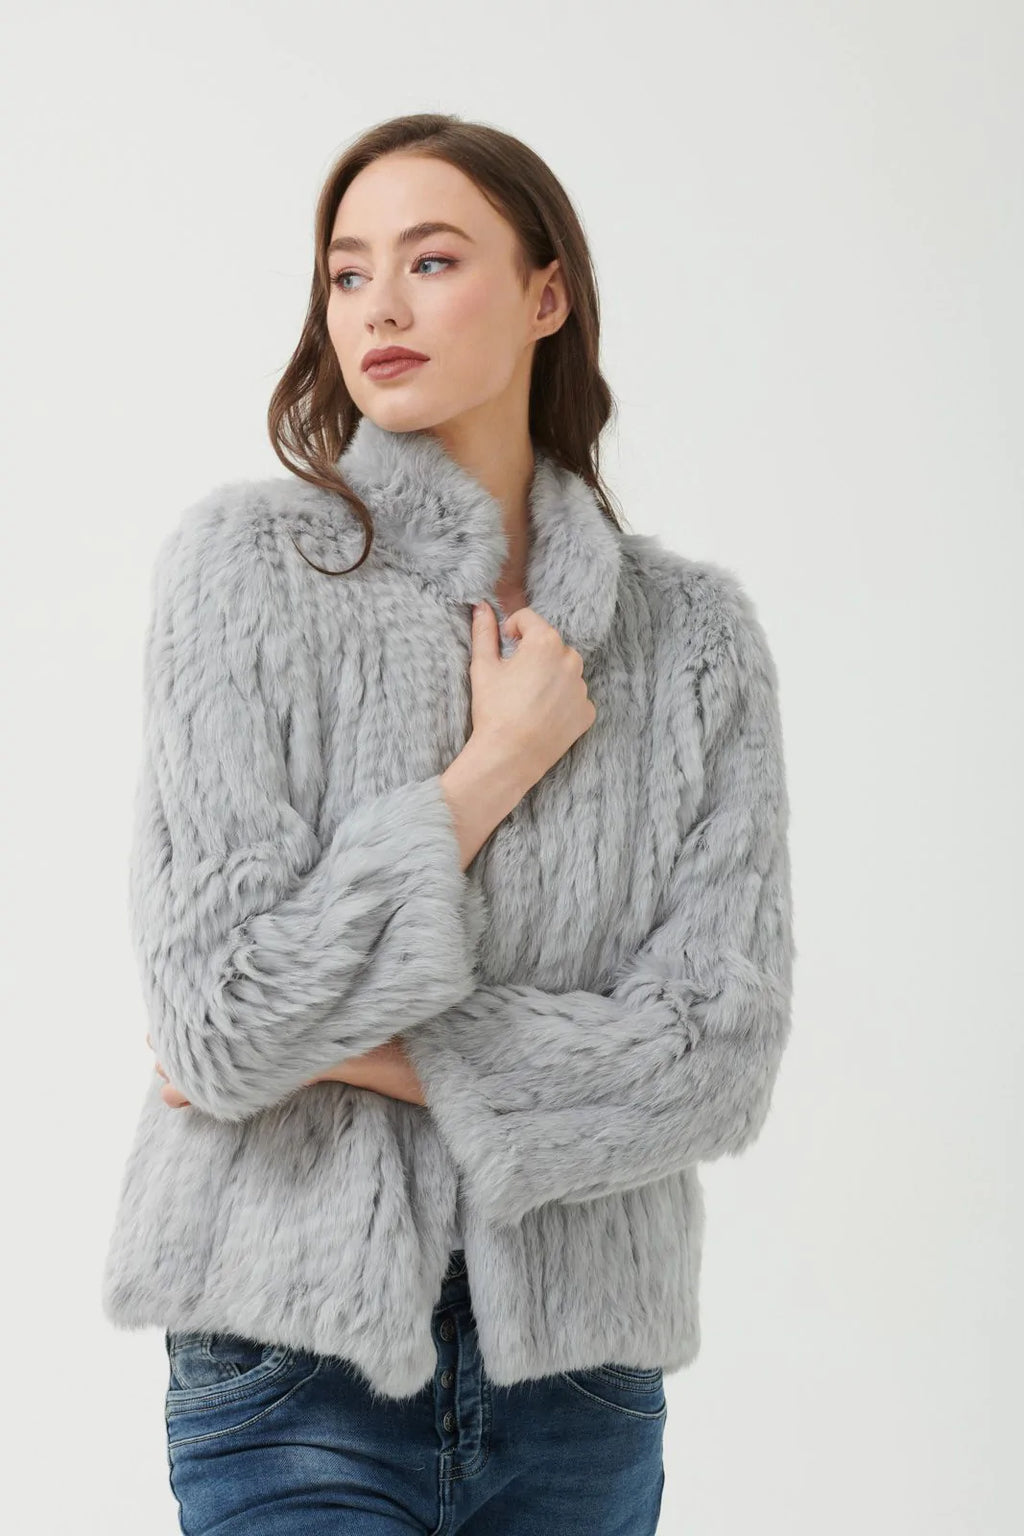 High neck fur jacket by 365 Days - Light Grey